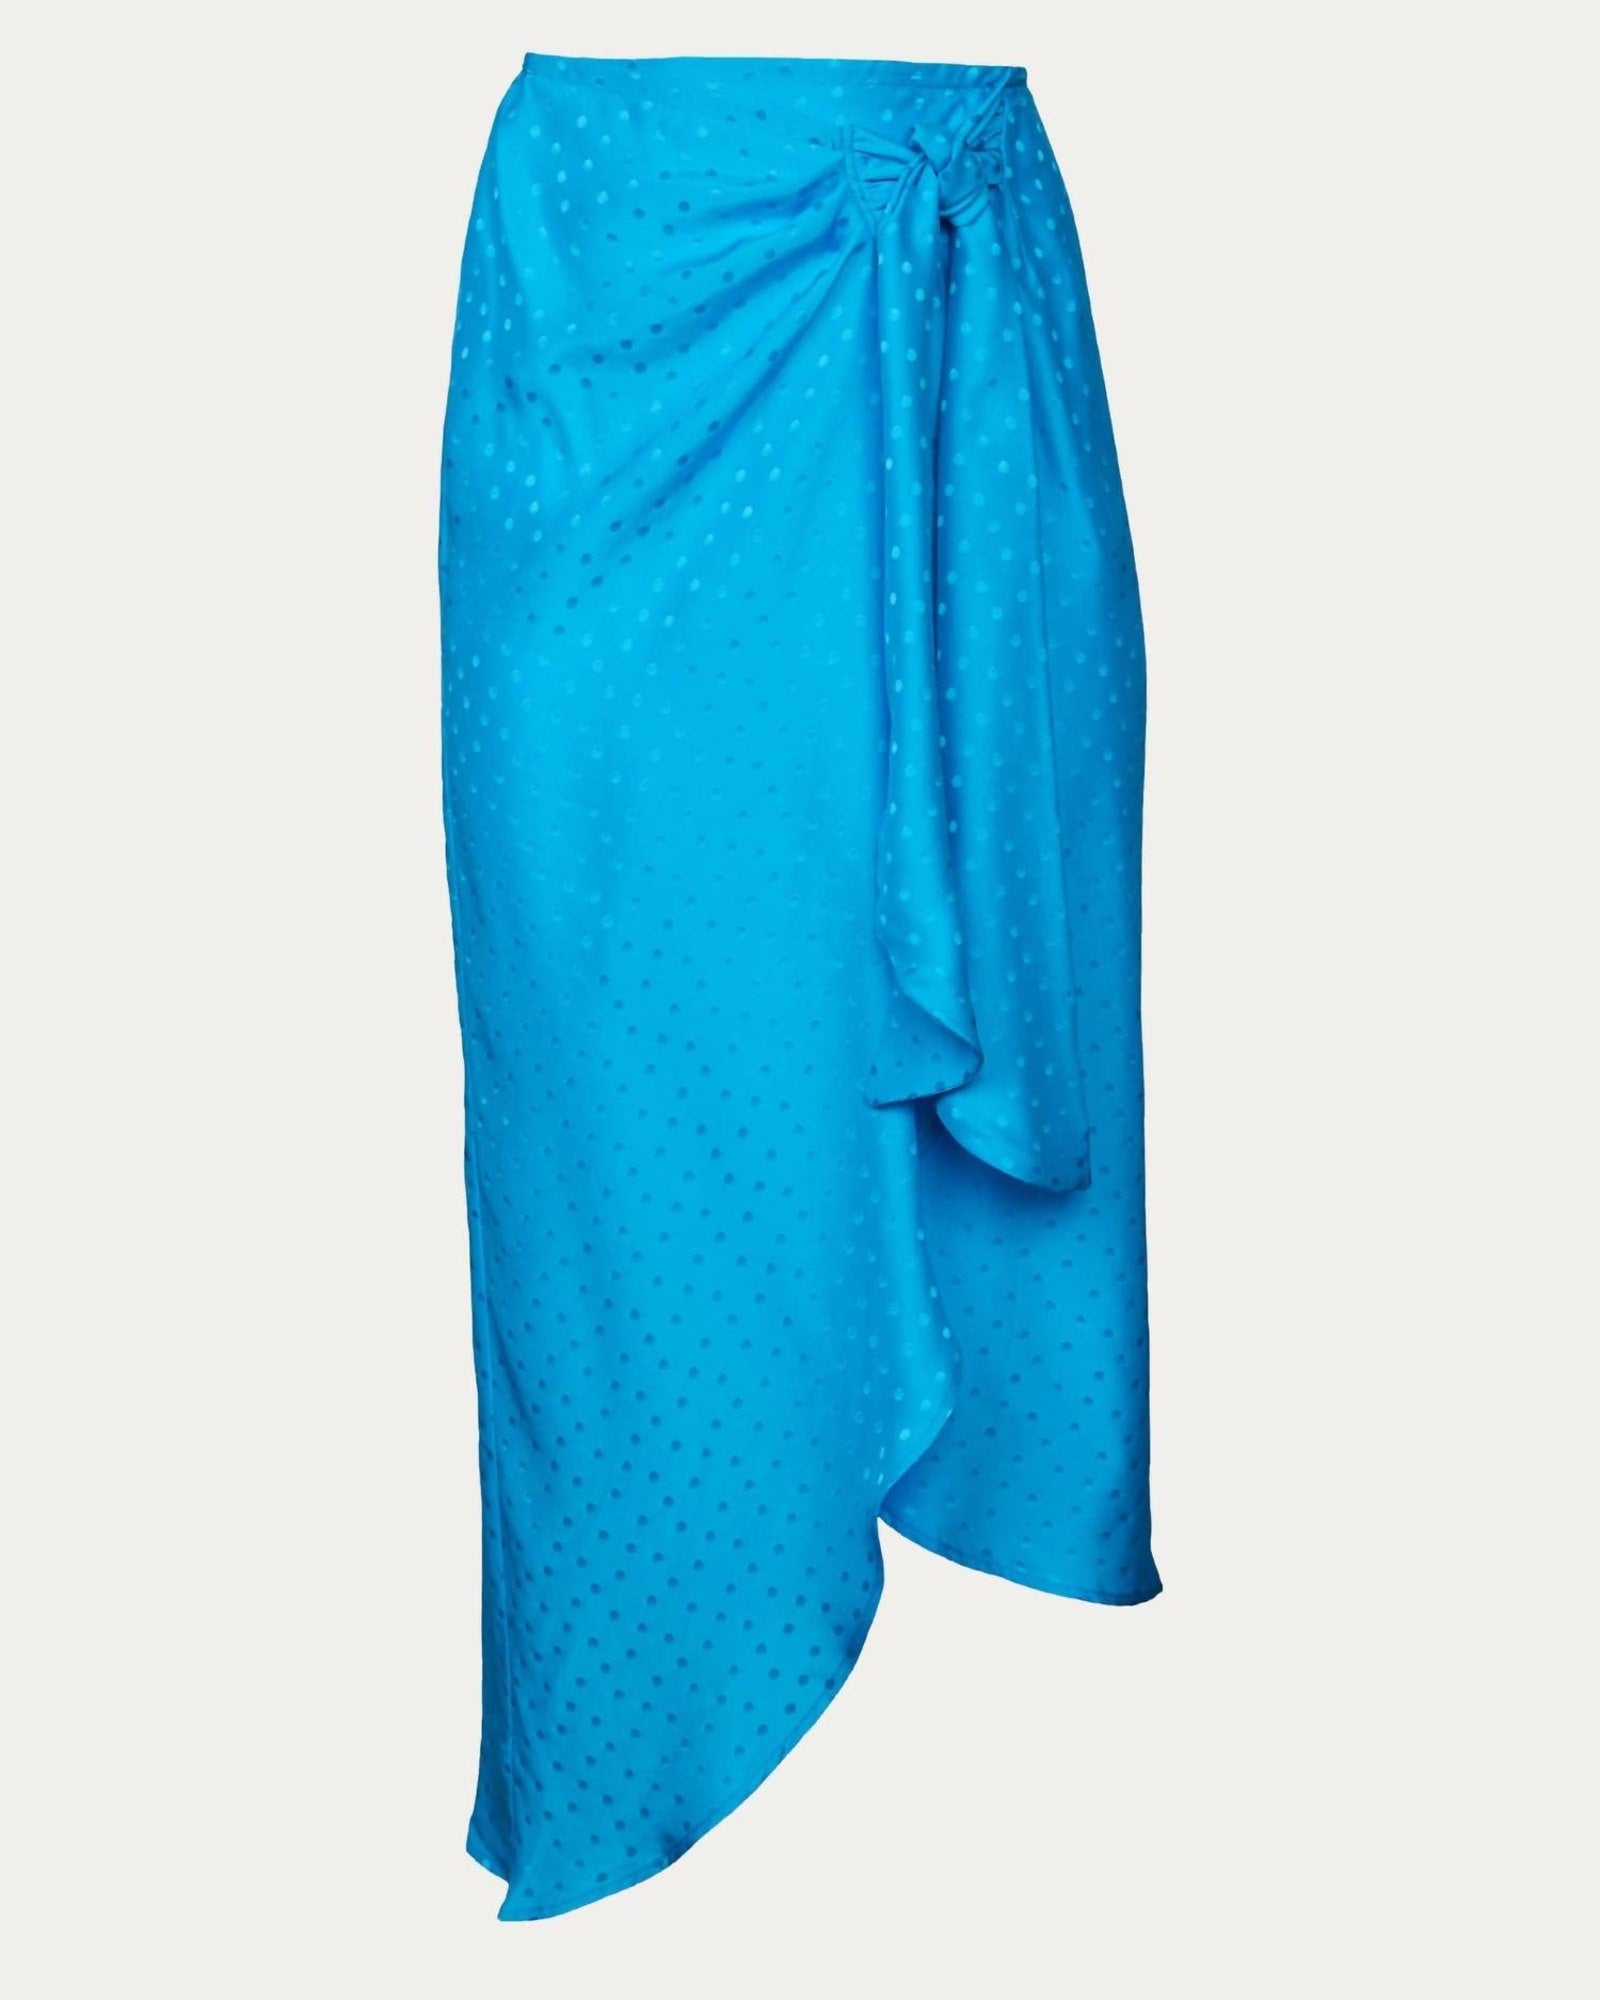 Skirt in Turquoise Jacquard | Turquoise Jacquard